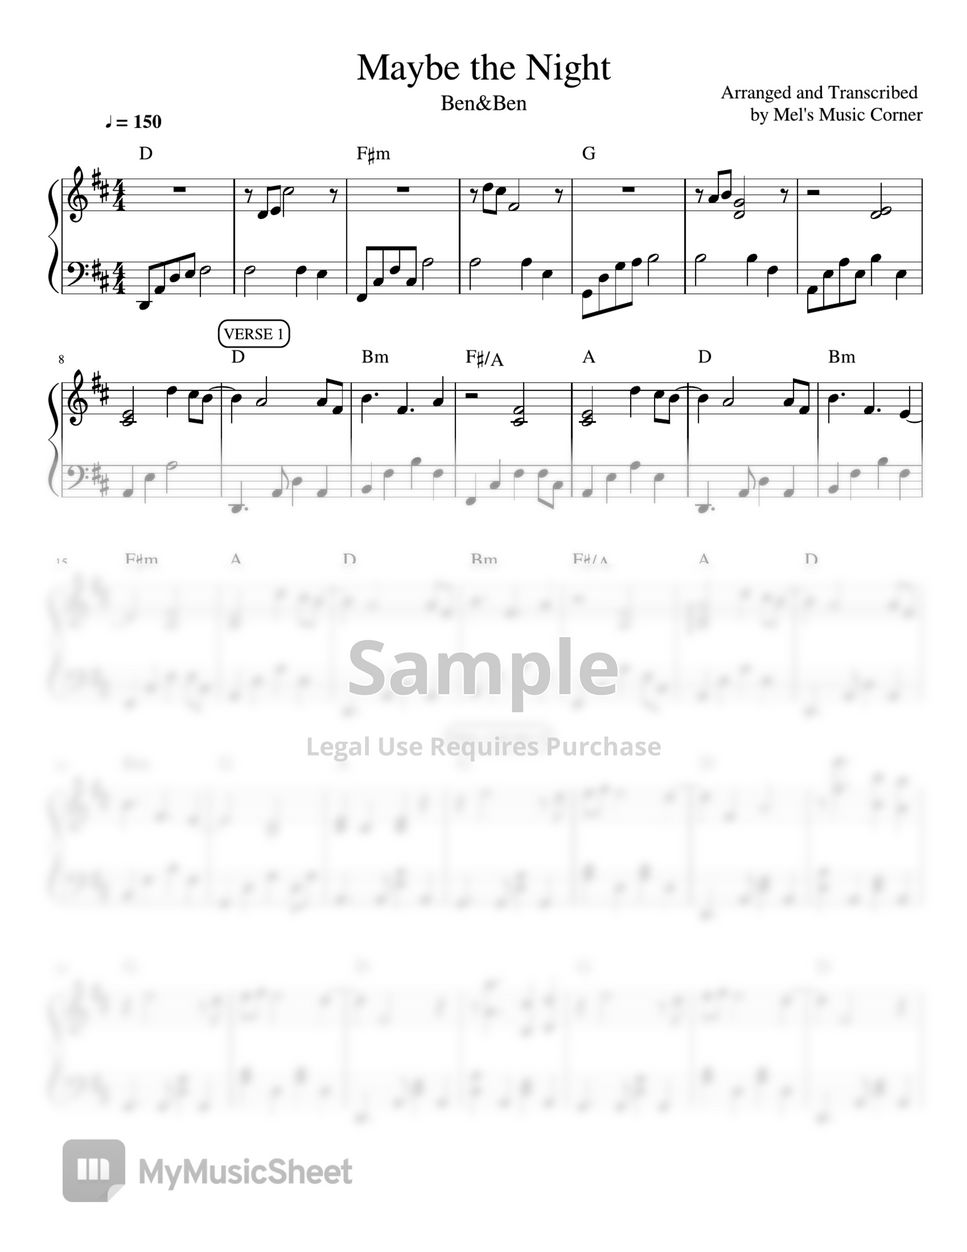 Ben&Ben - Maybe the Night (piano sheet music) by Mel's Music Corner